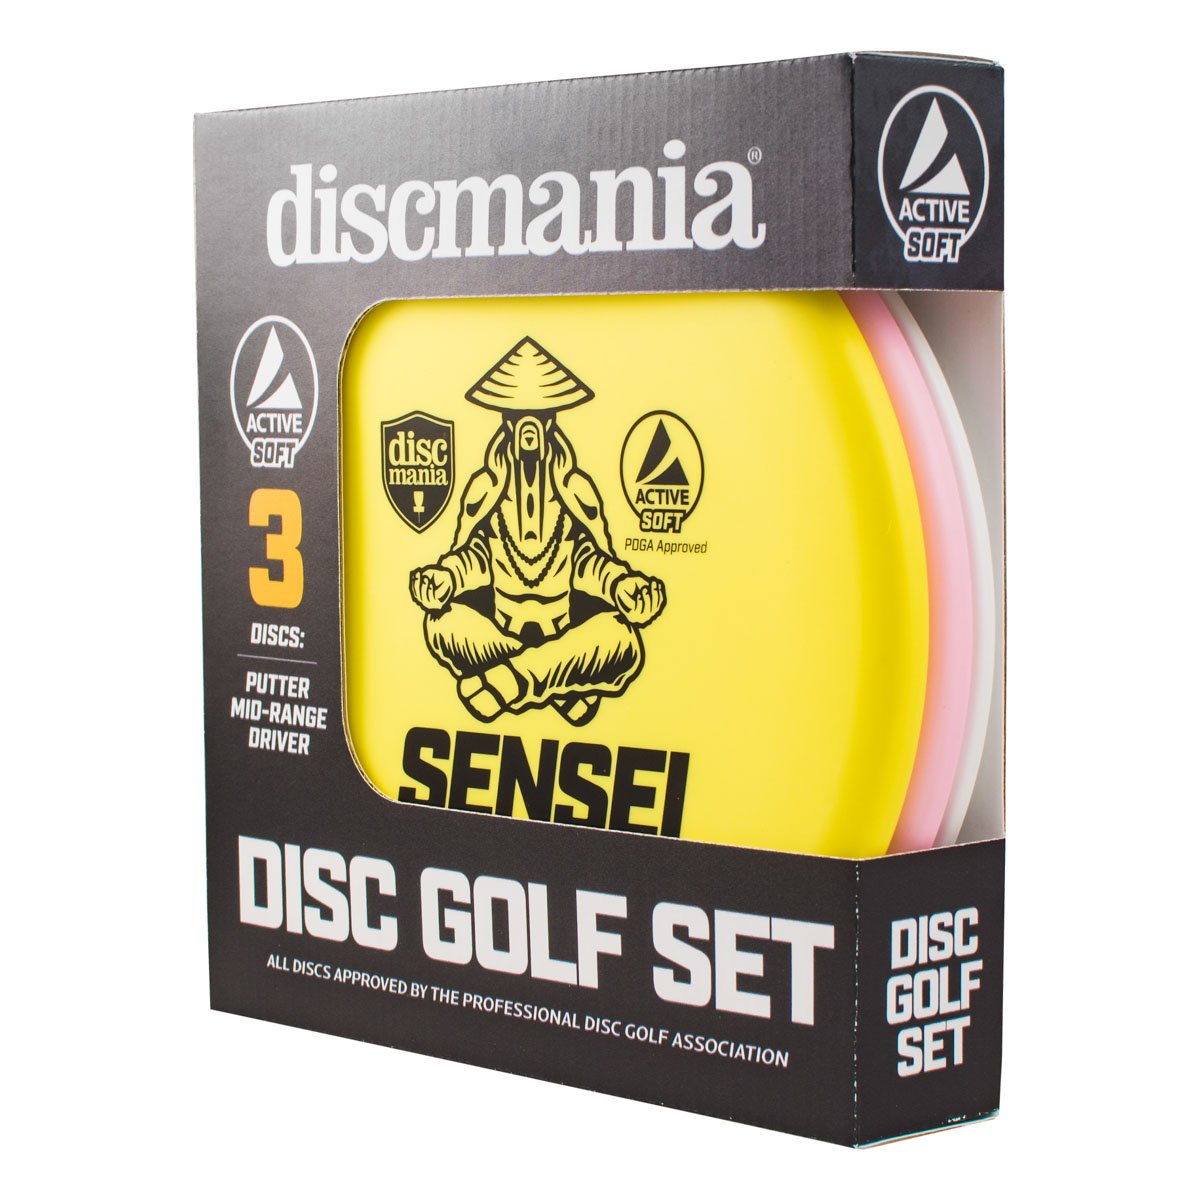 Discmania Active Line Soft Starter Set (3 discs included)